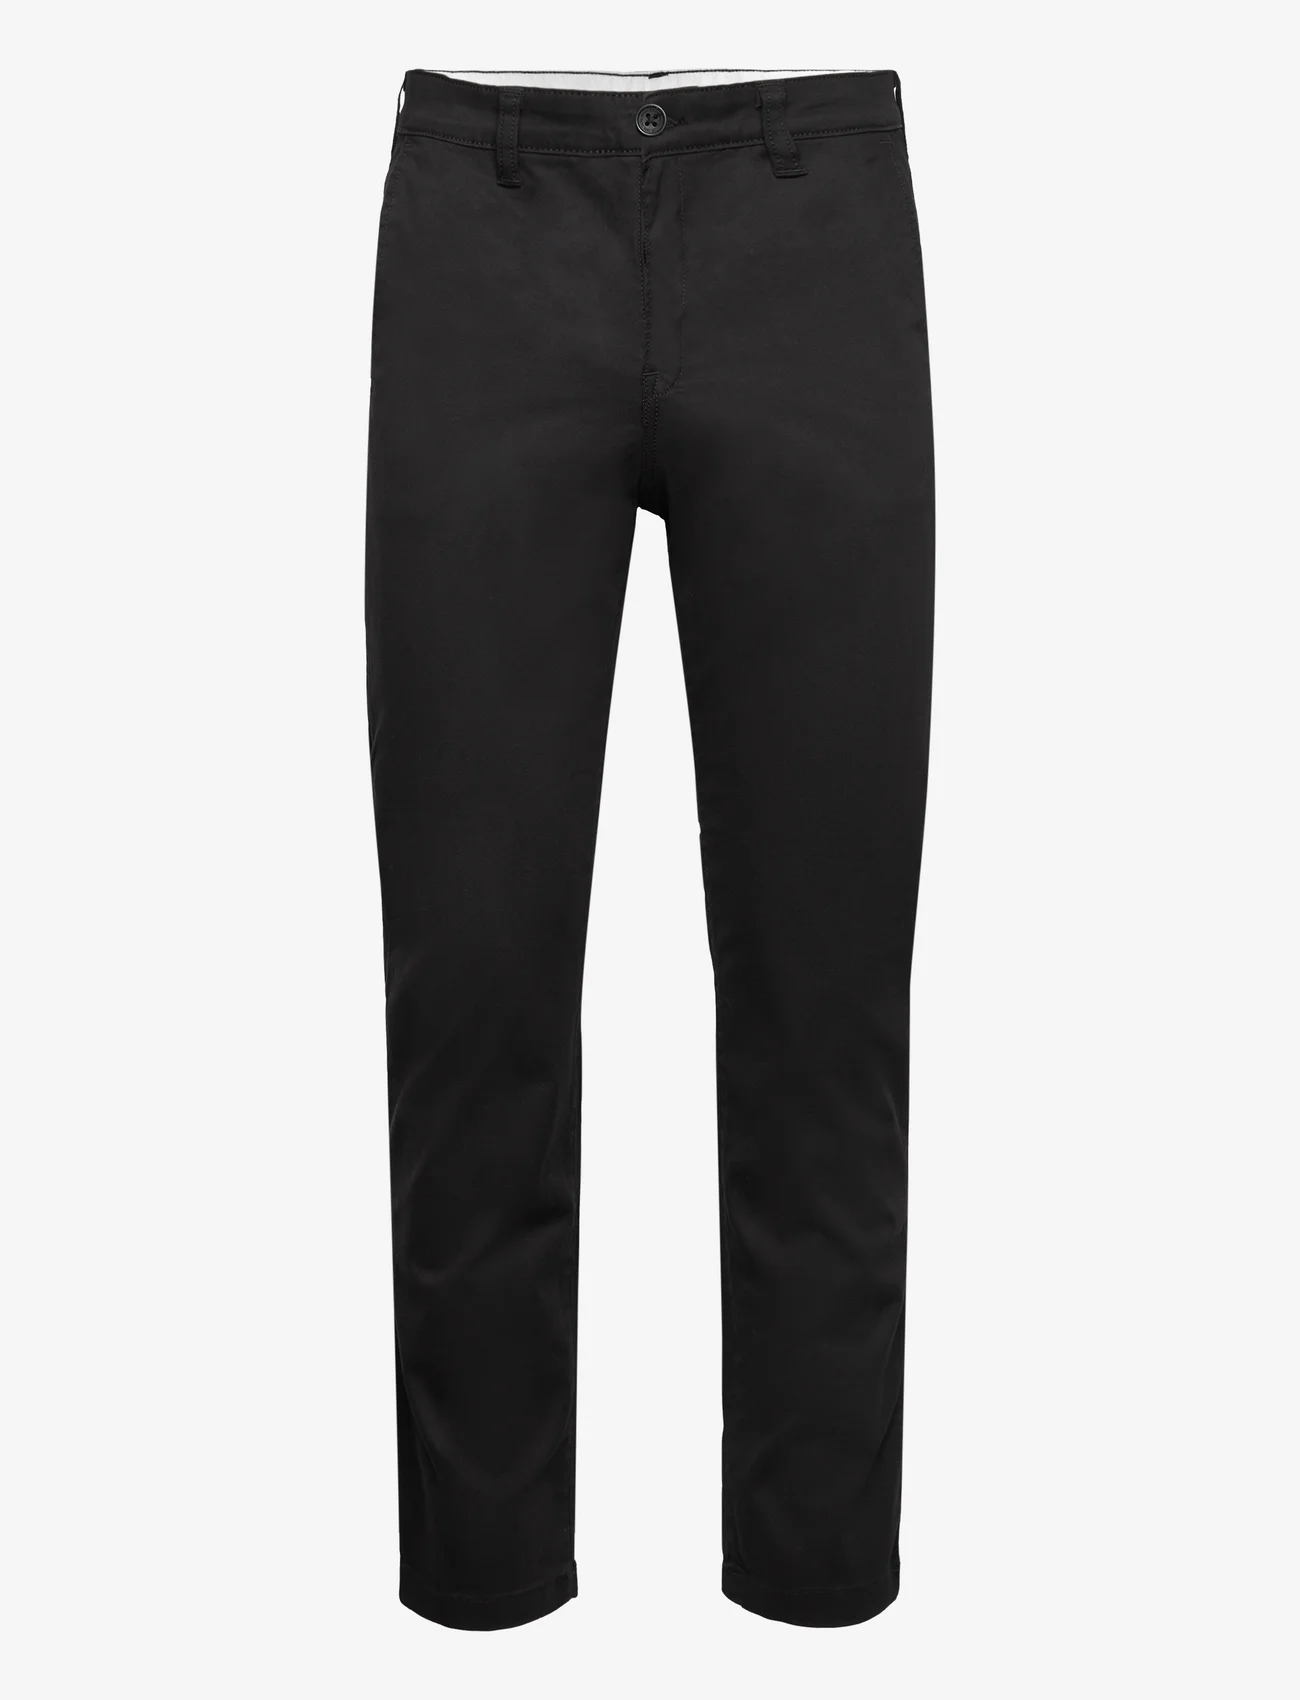 Lee Jeans - REGULAR CHINO SHORT - chinos - black - 0